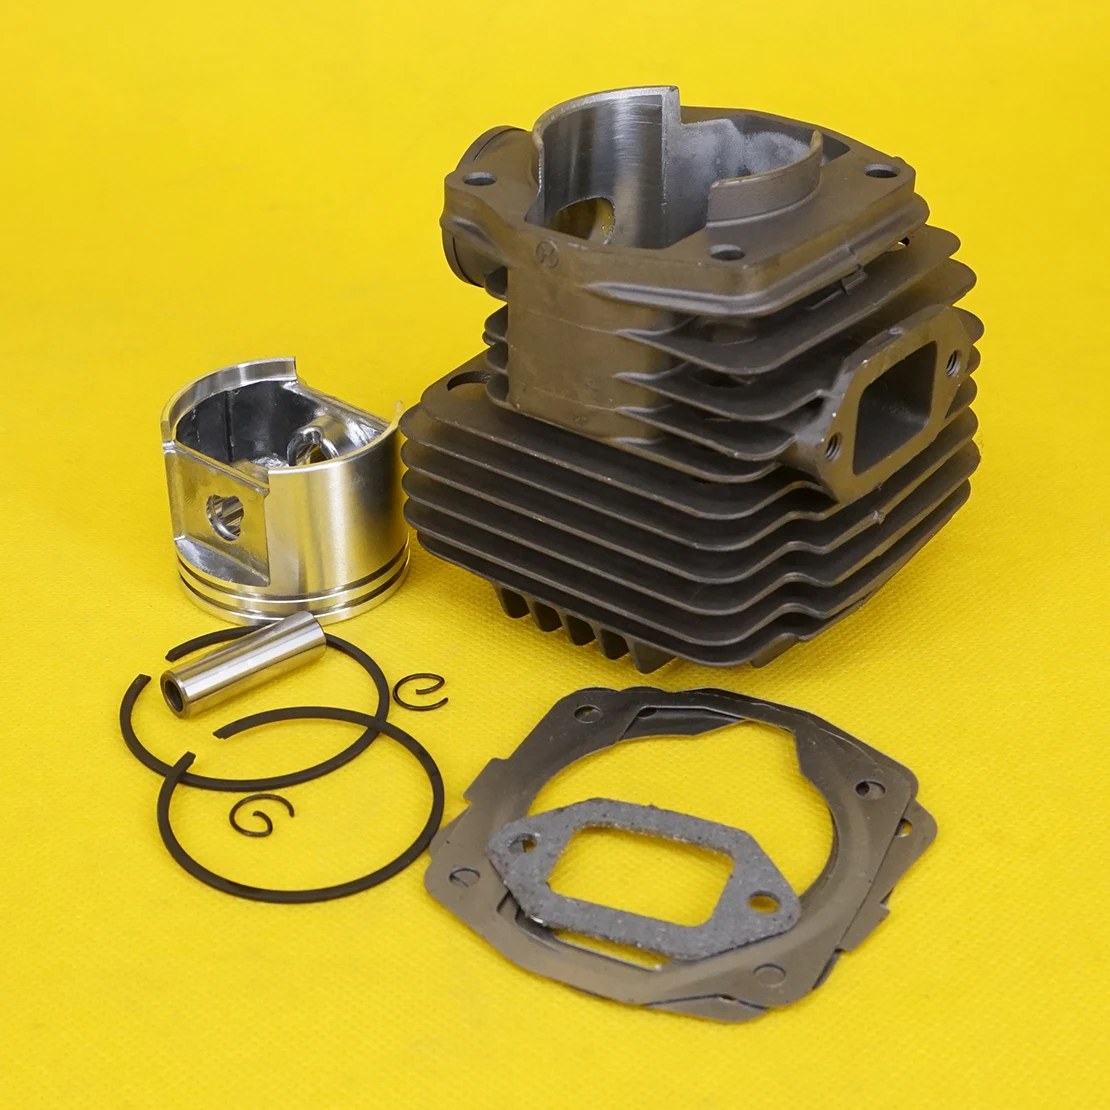 

1Set Black Metal Cylinder Piston Bearings Top End Gasket Rebuild Kit Set Fit For Stihl TS400 4223 020 1200